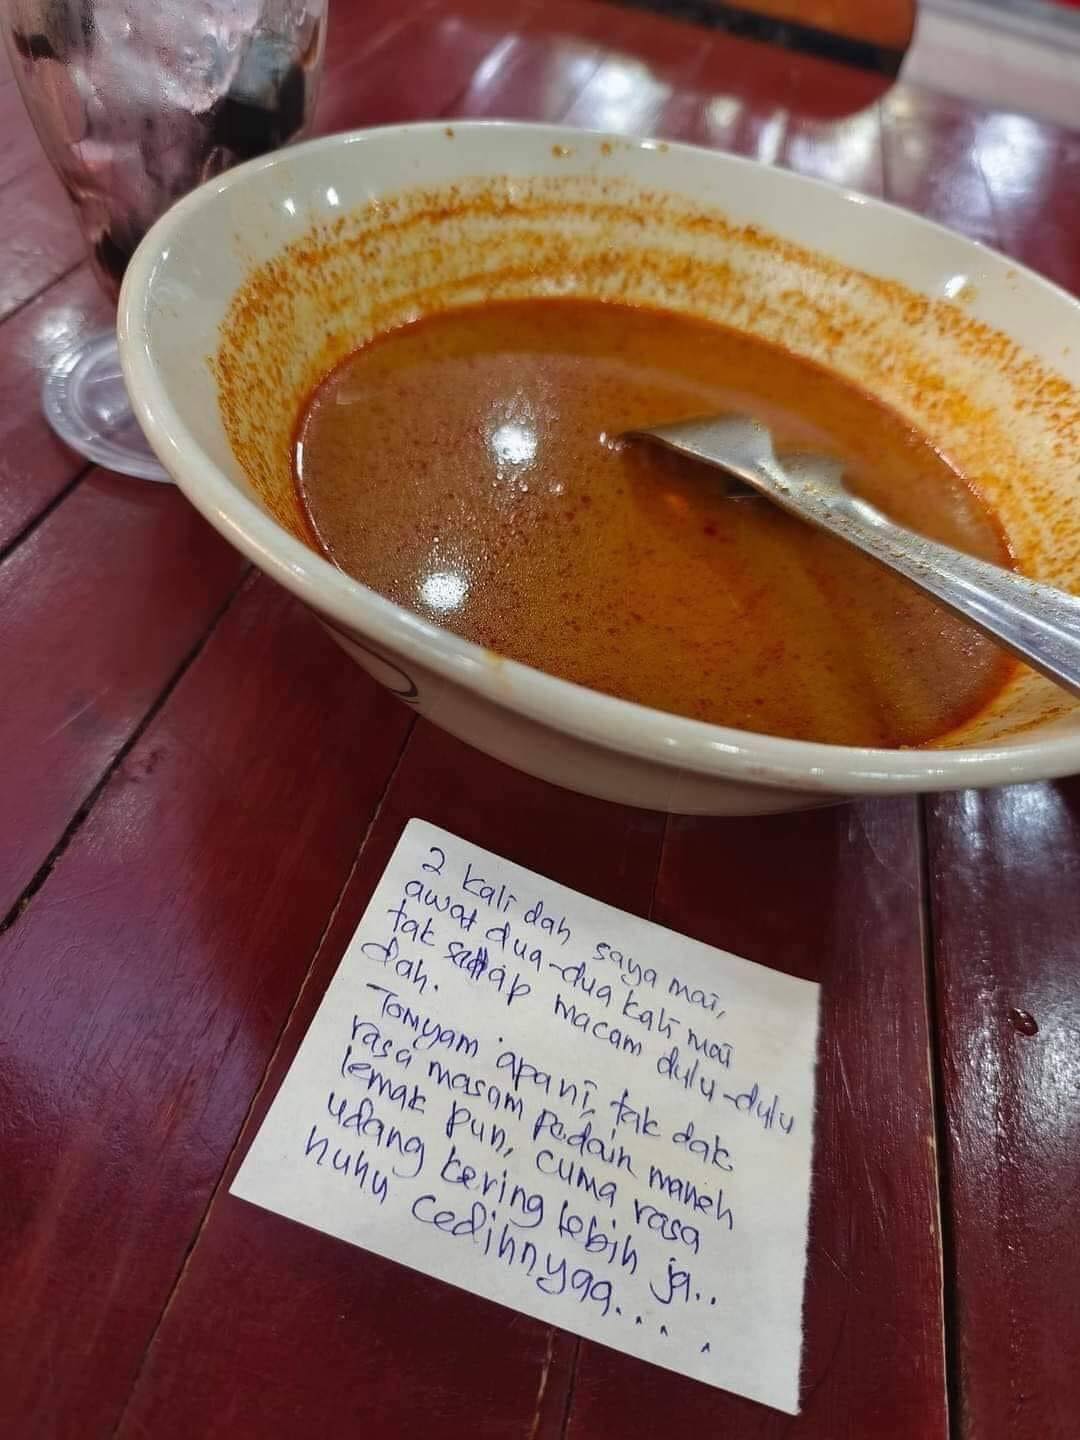 M'sian leaves handwritten note on table over 'tasteless' tom yam, gets praised by netizens for being civil | weirdkaya